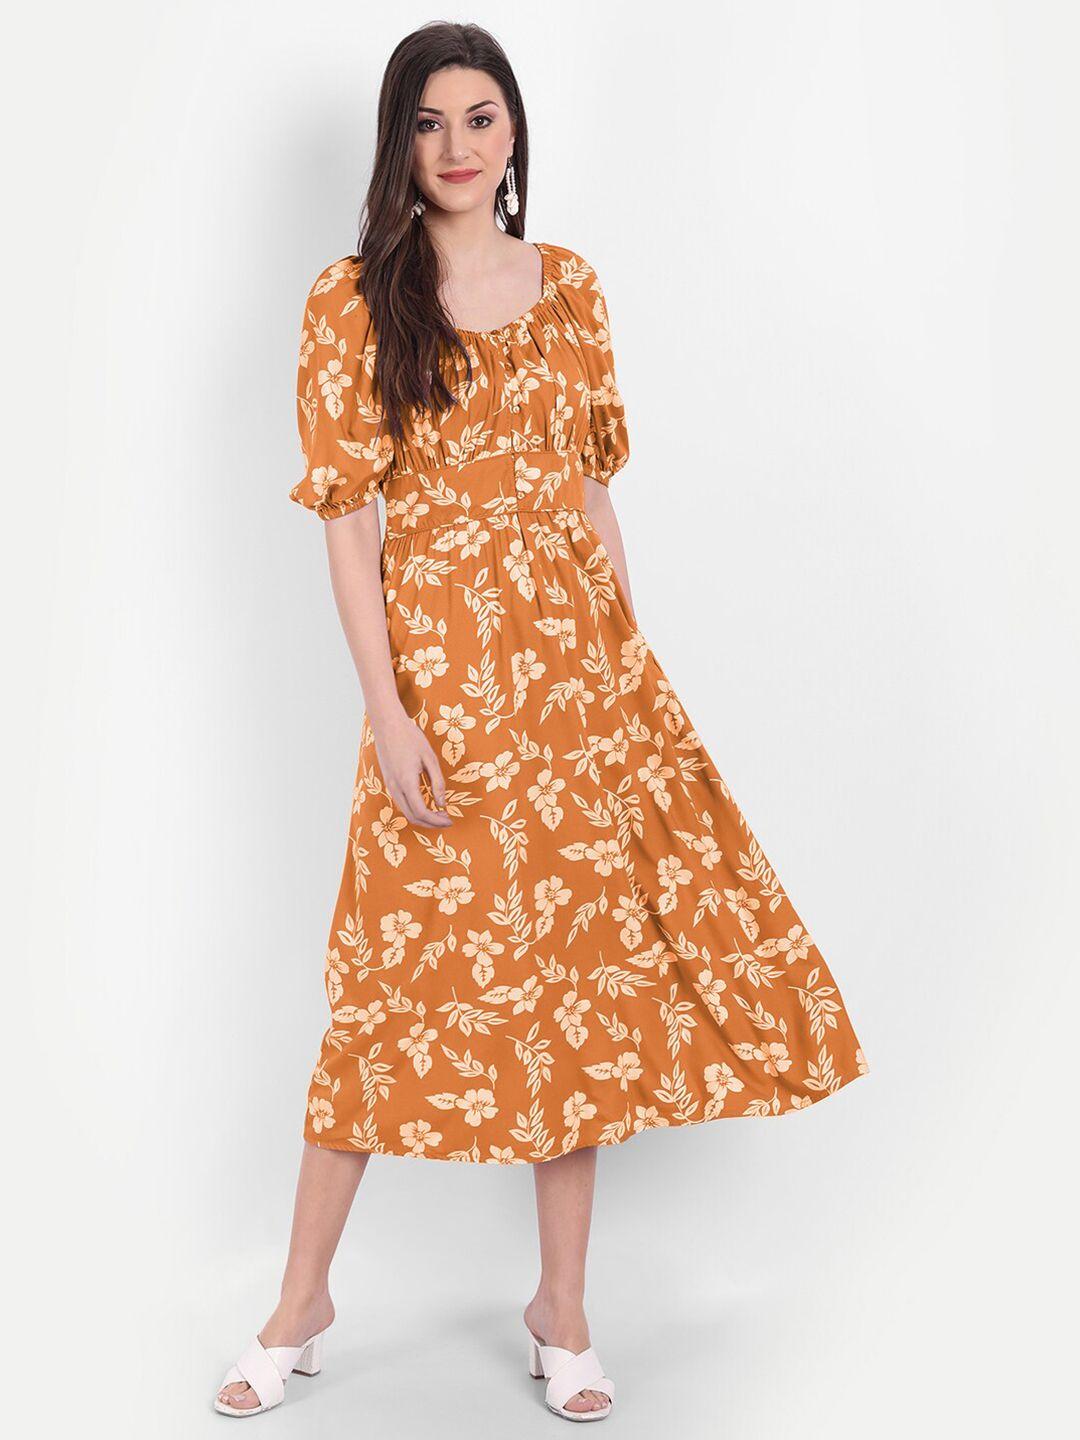 minglay orange floral a-line dress